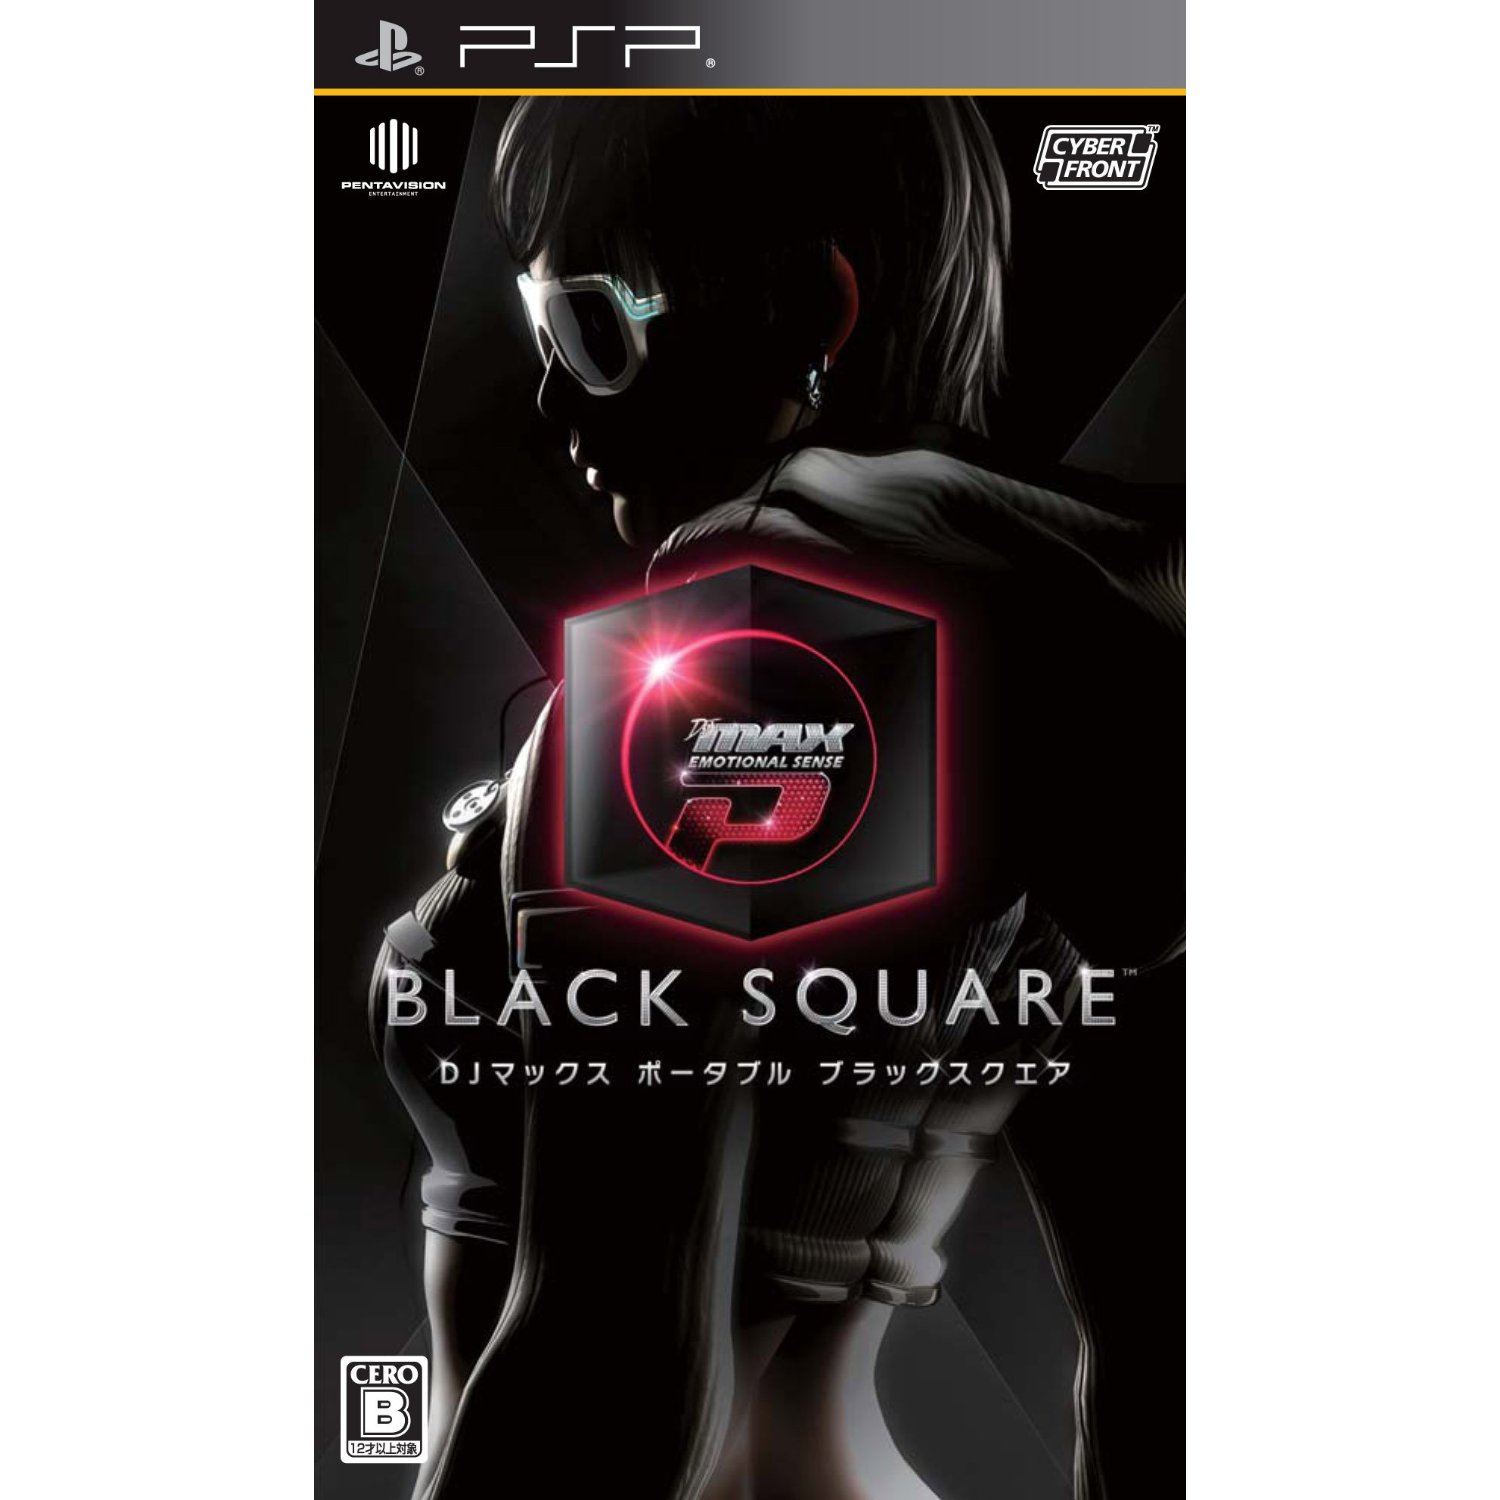 DJ Max Portable: Black Square for Sony PSP